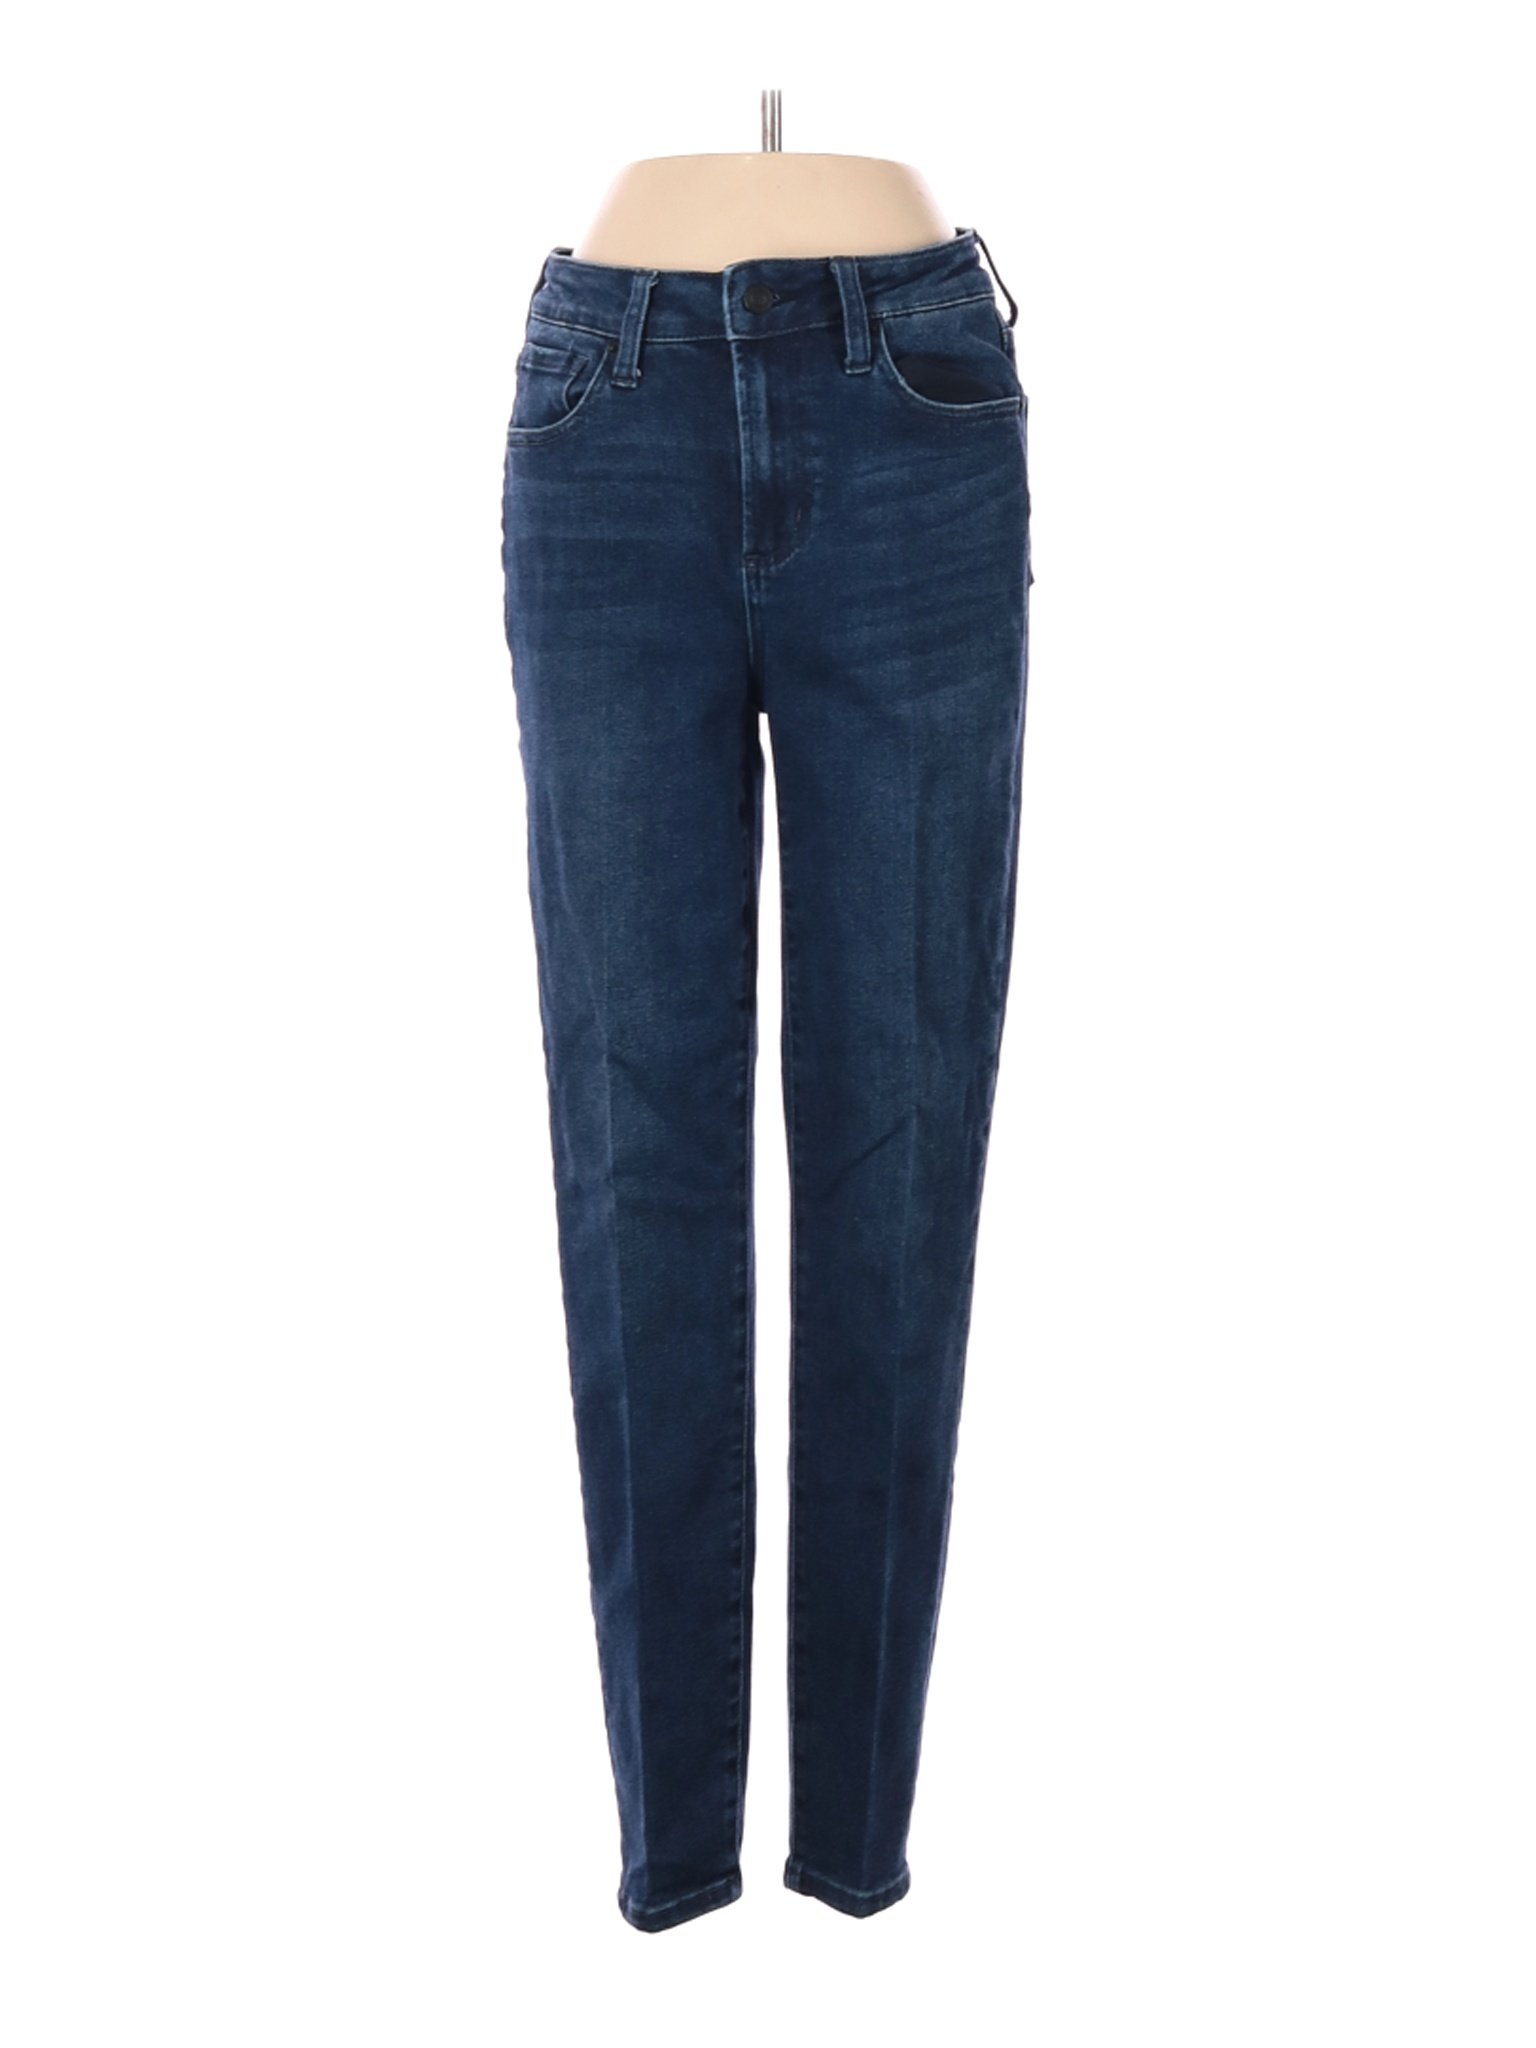 Max Studio Women Blue Jeans 4 | eBay